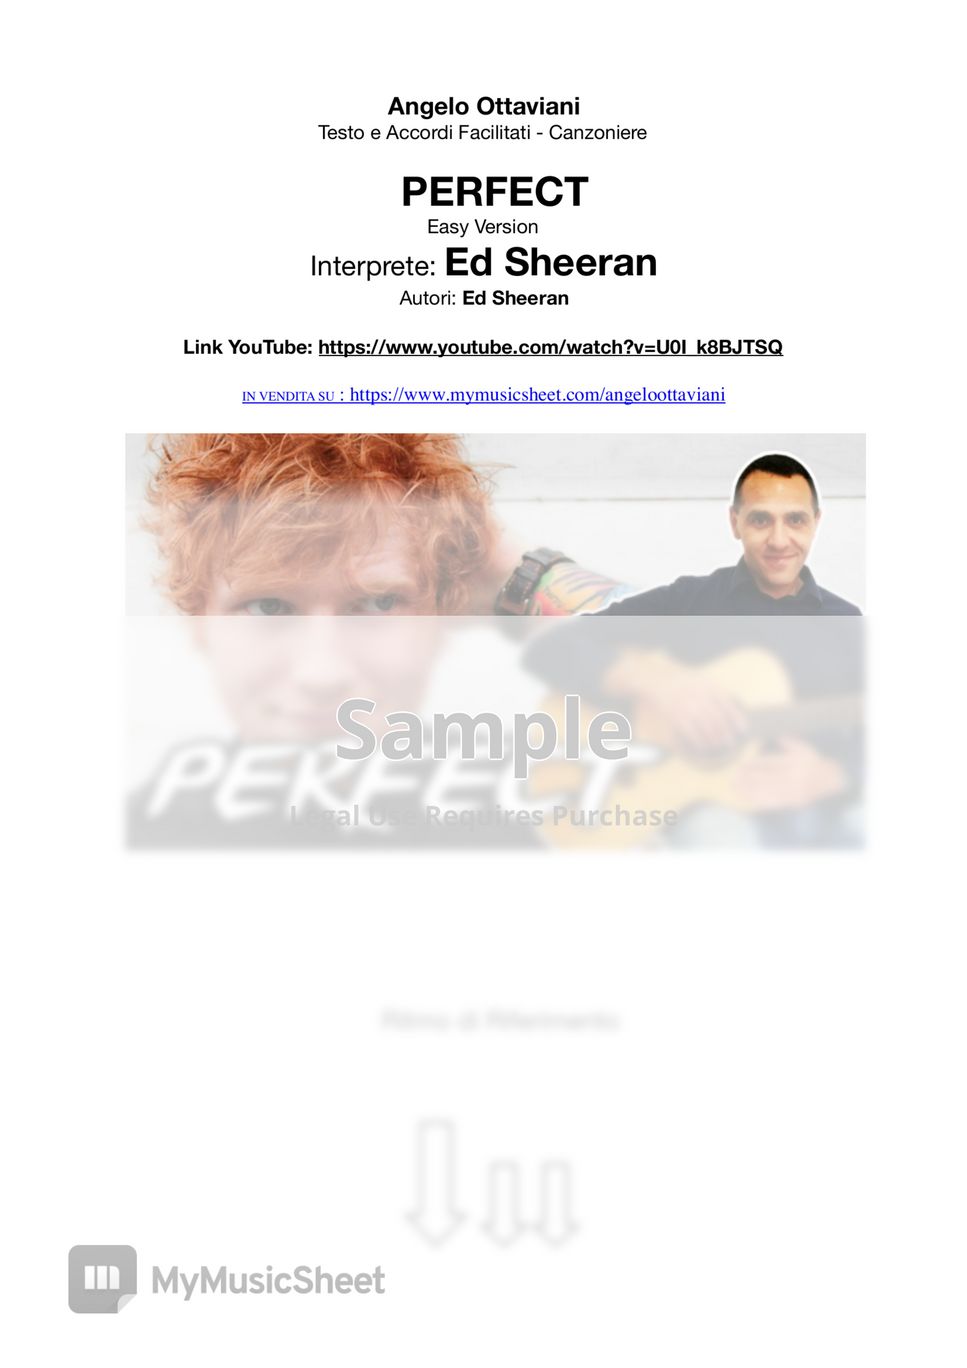 Ed Sheeran - Perfect - Fingerstyle + Testo e accordi by Guitar